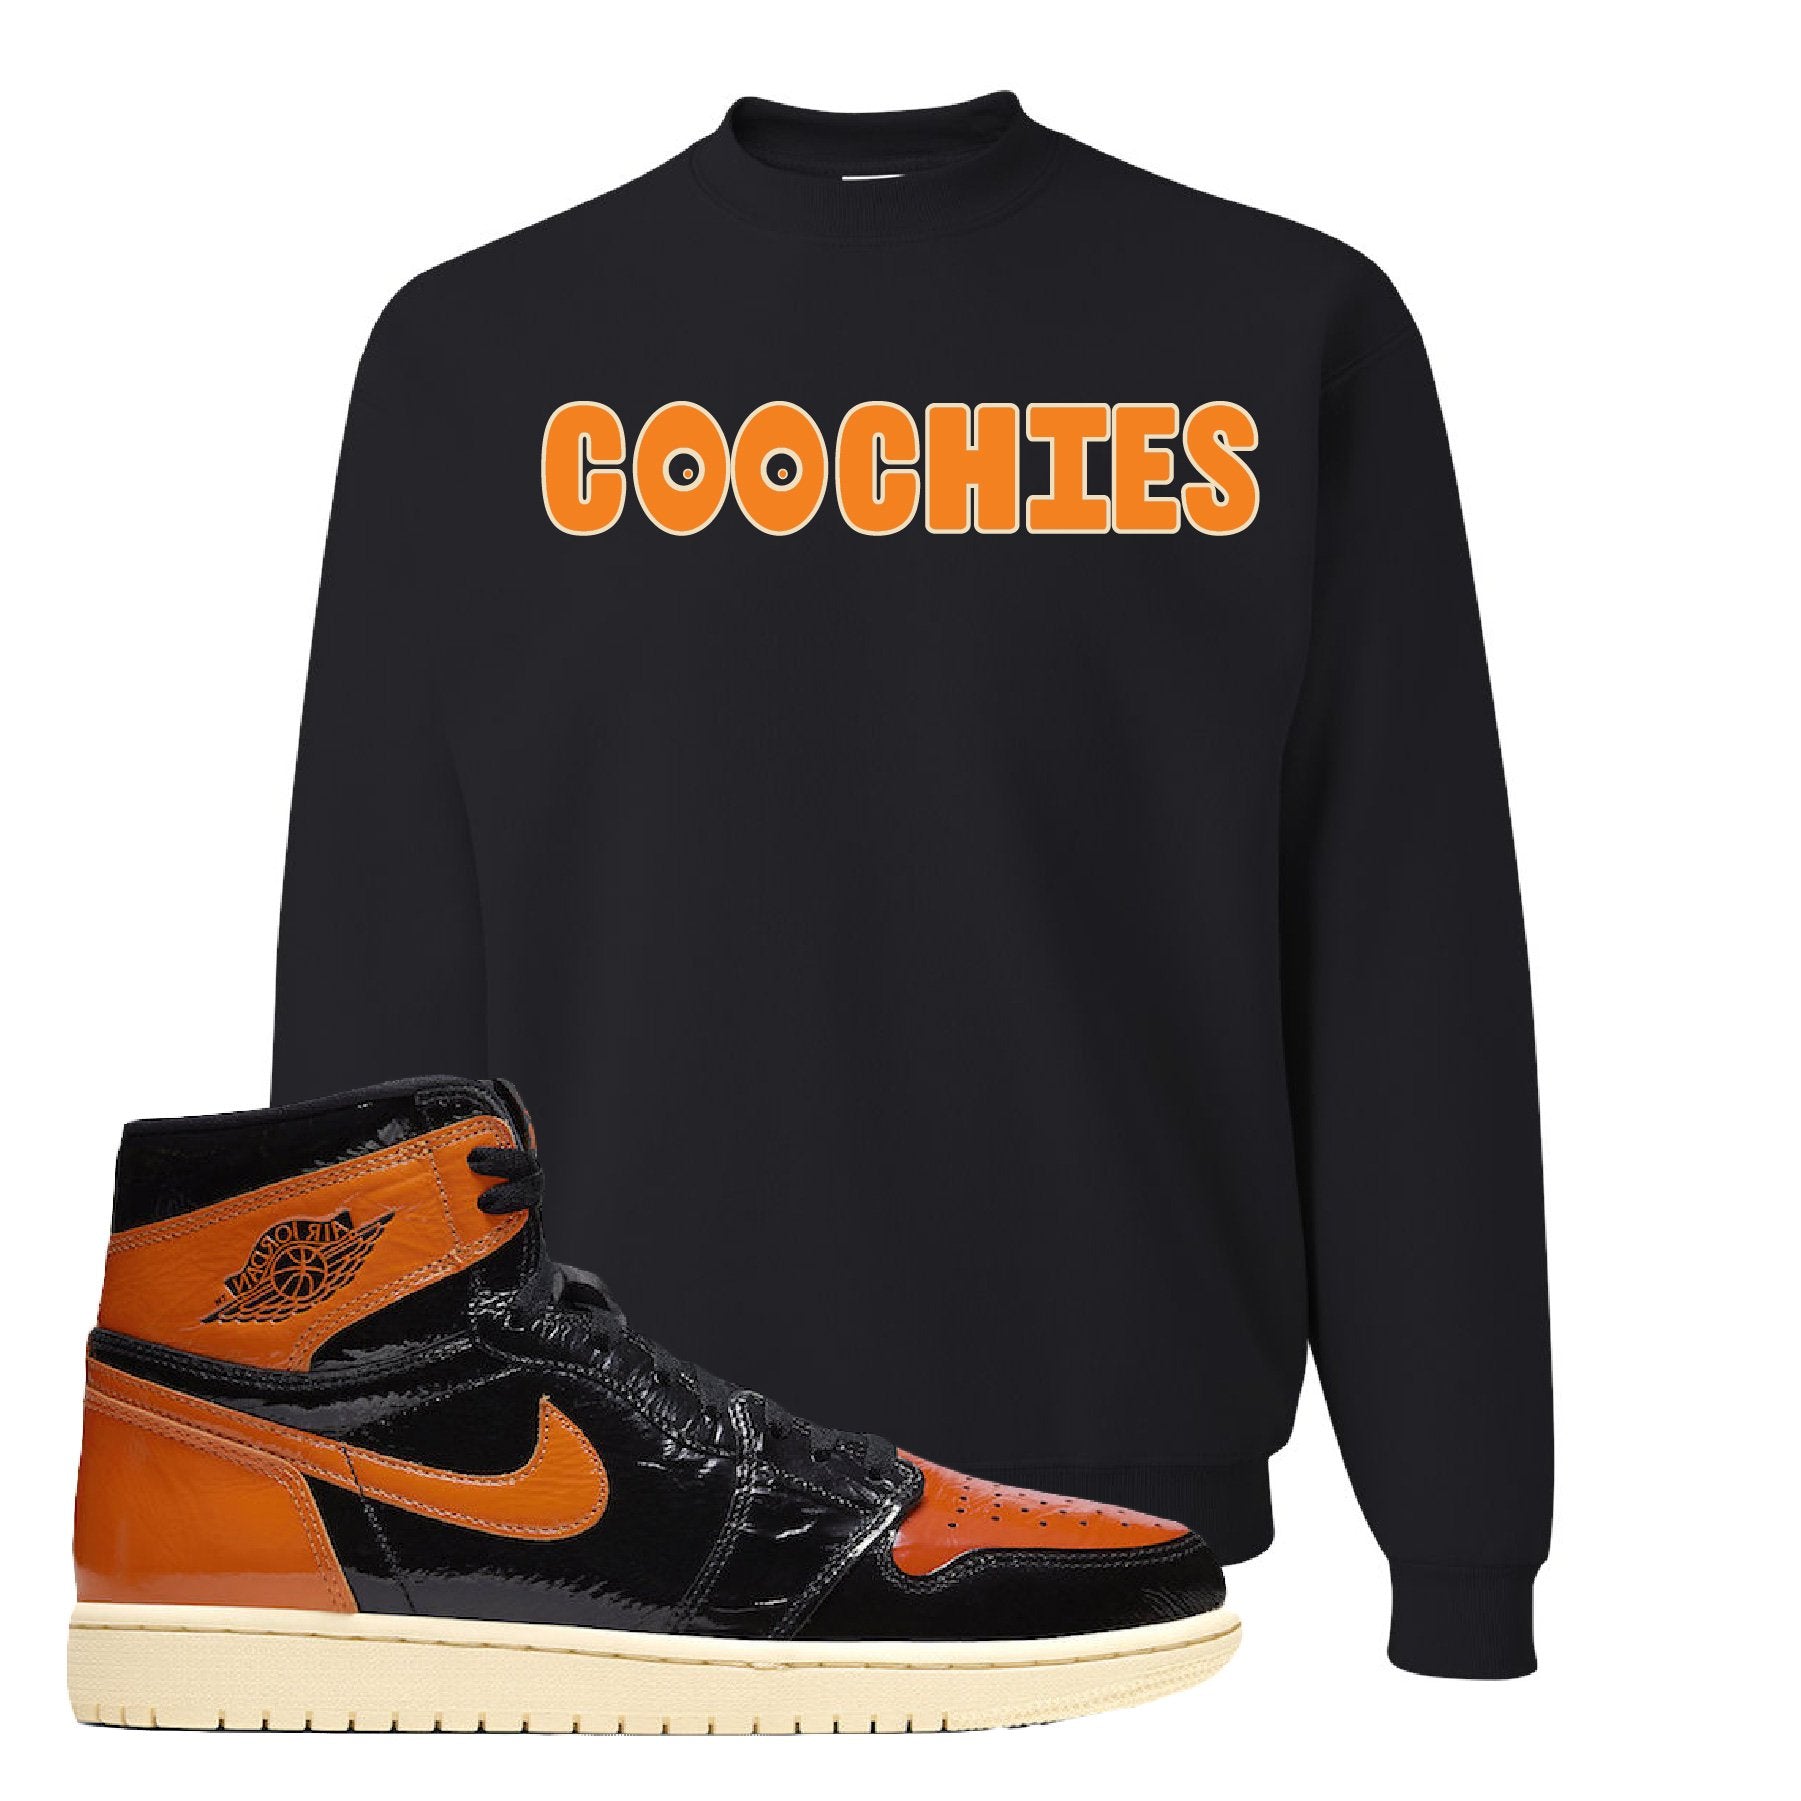 Jordan 1 Shattered Backboard Coochies Black Sneaker Hook Up Crewneck Sweatshirt